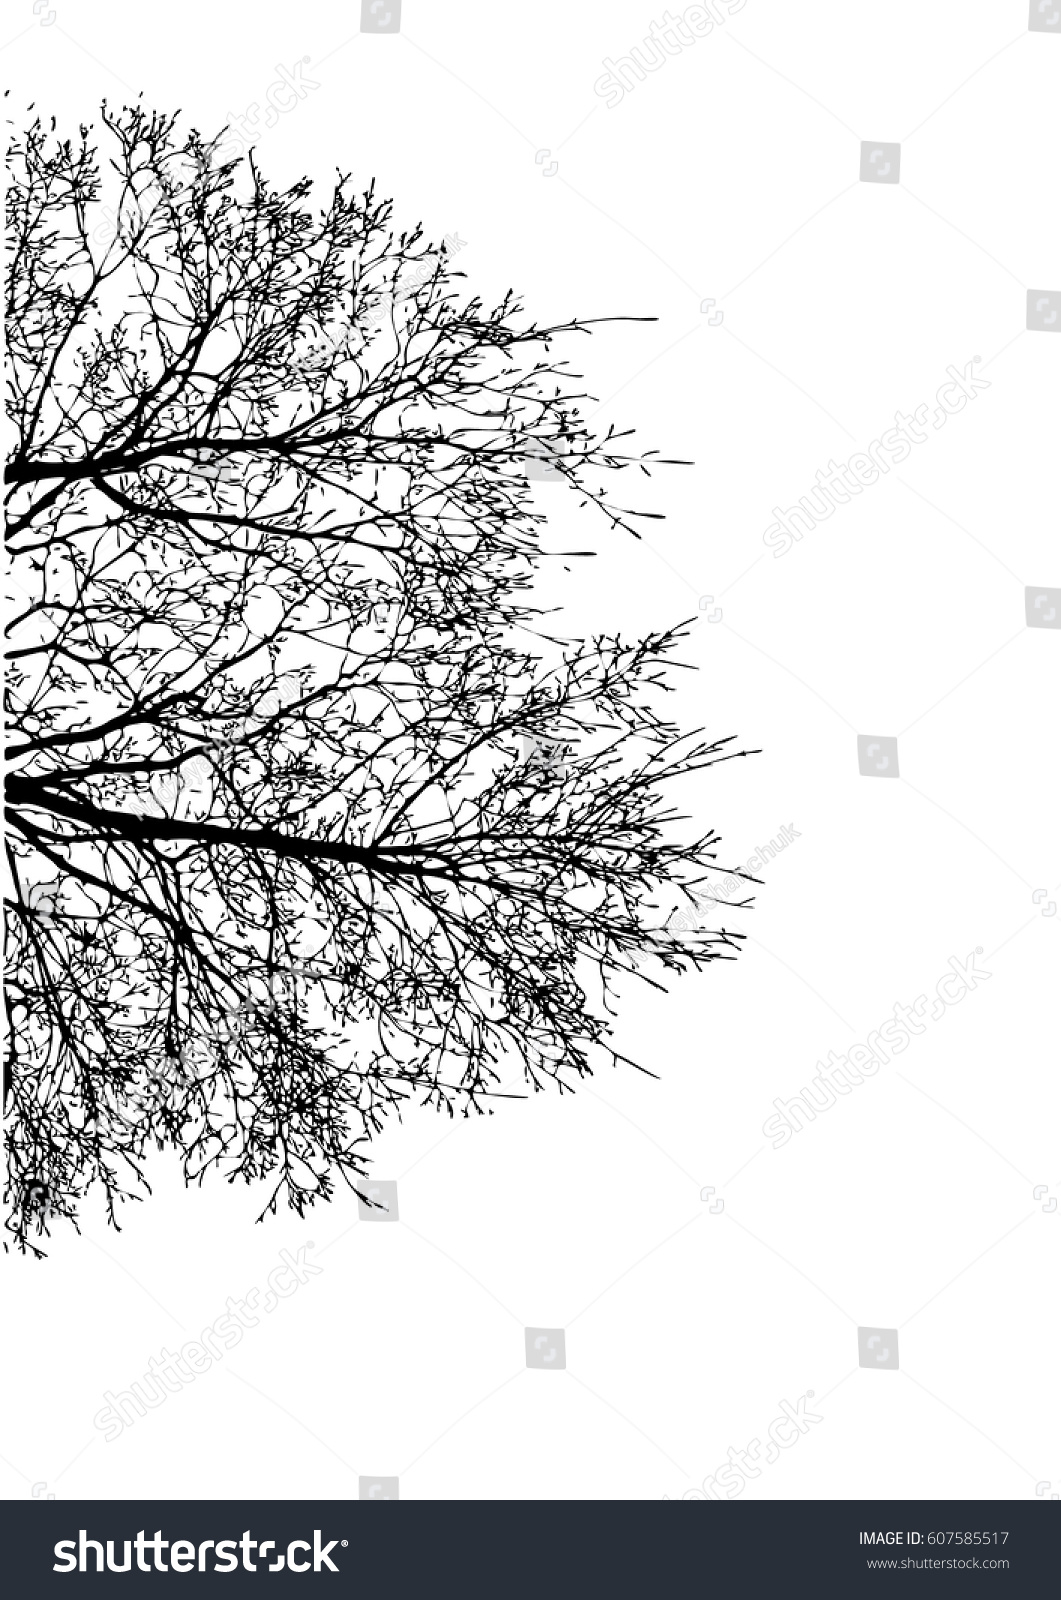 Edit Vectors Free Online - Silhouette of tree | Shutterstock Editor